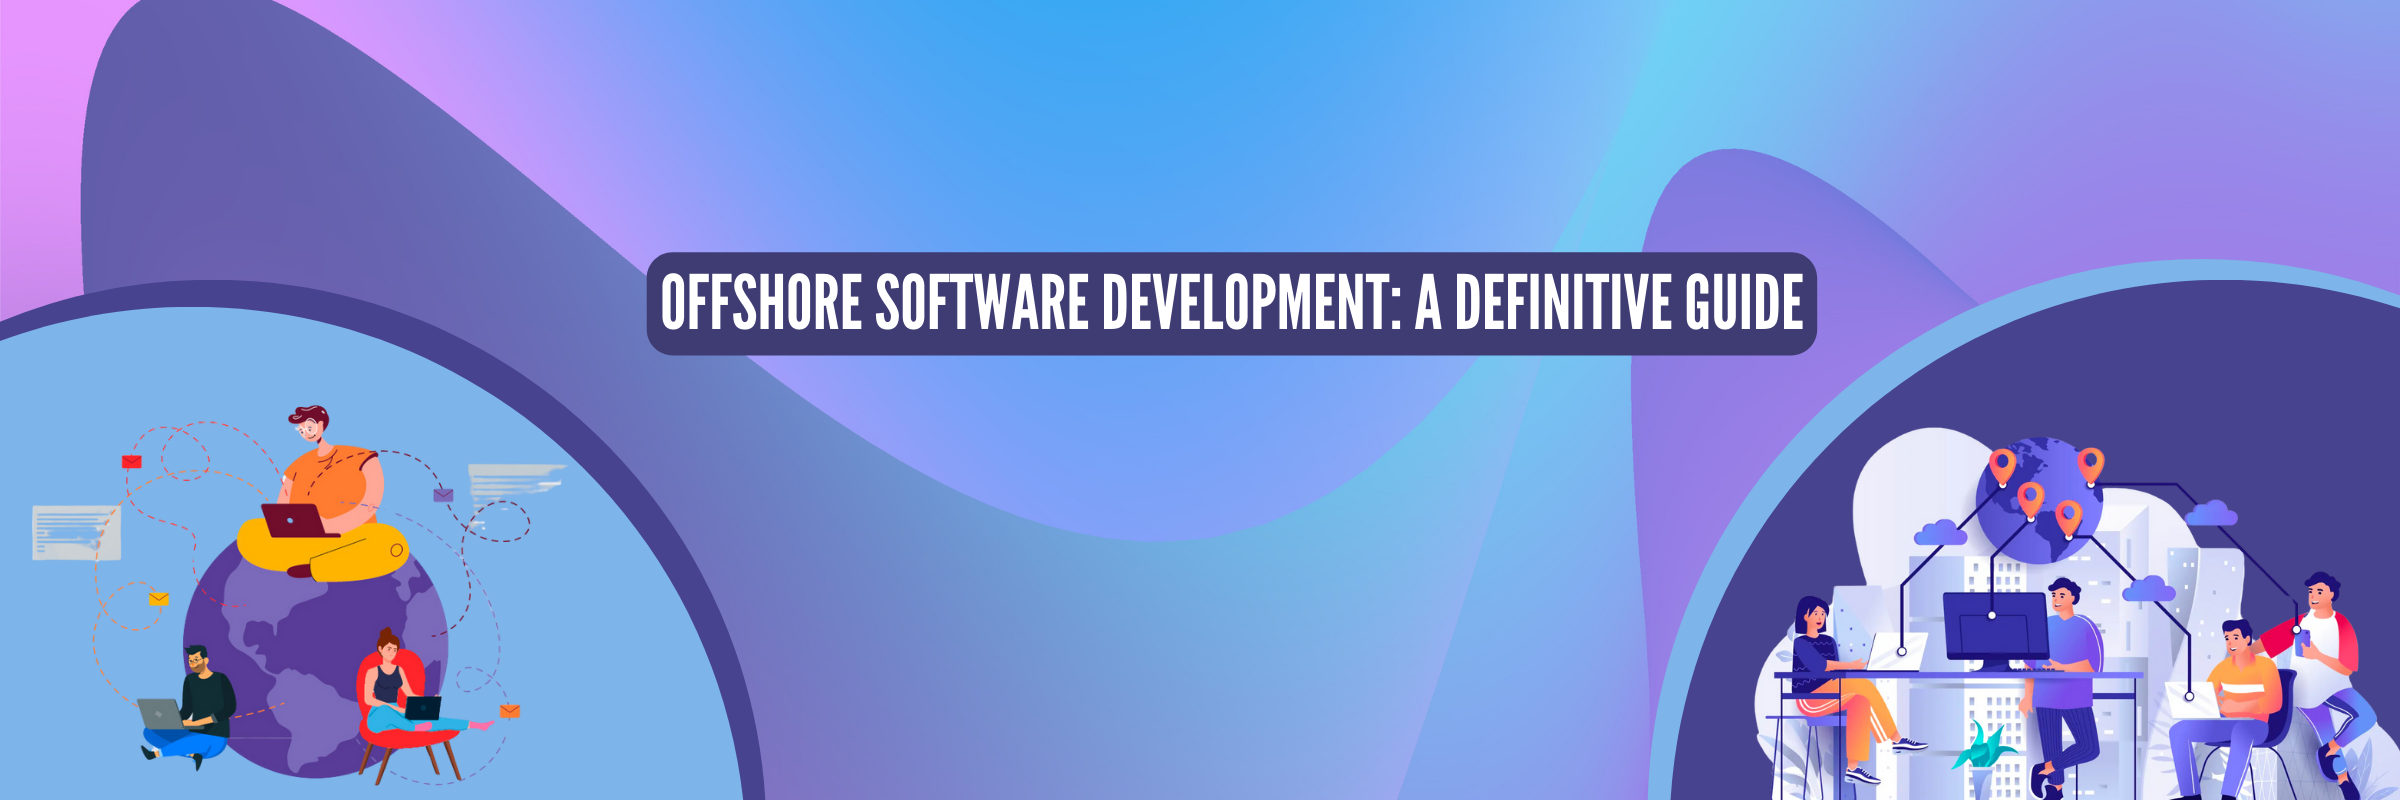 Offshore Software Development: A Definitive Guide